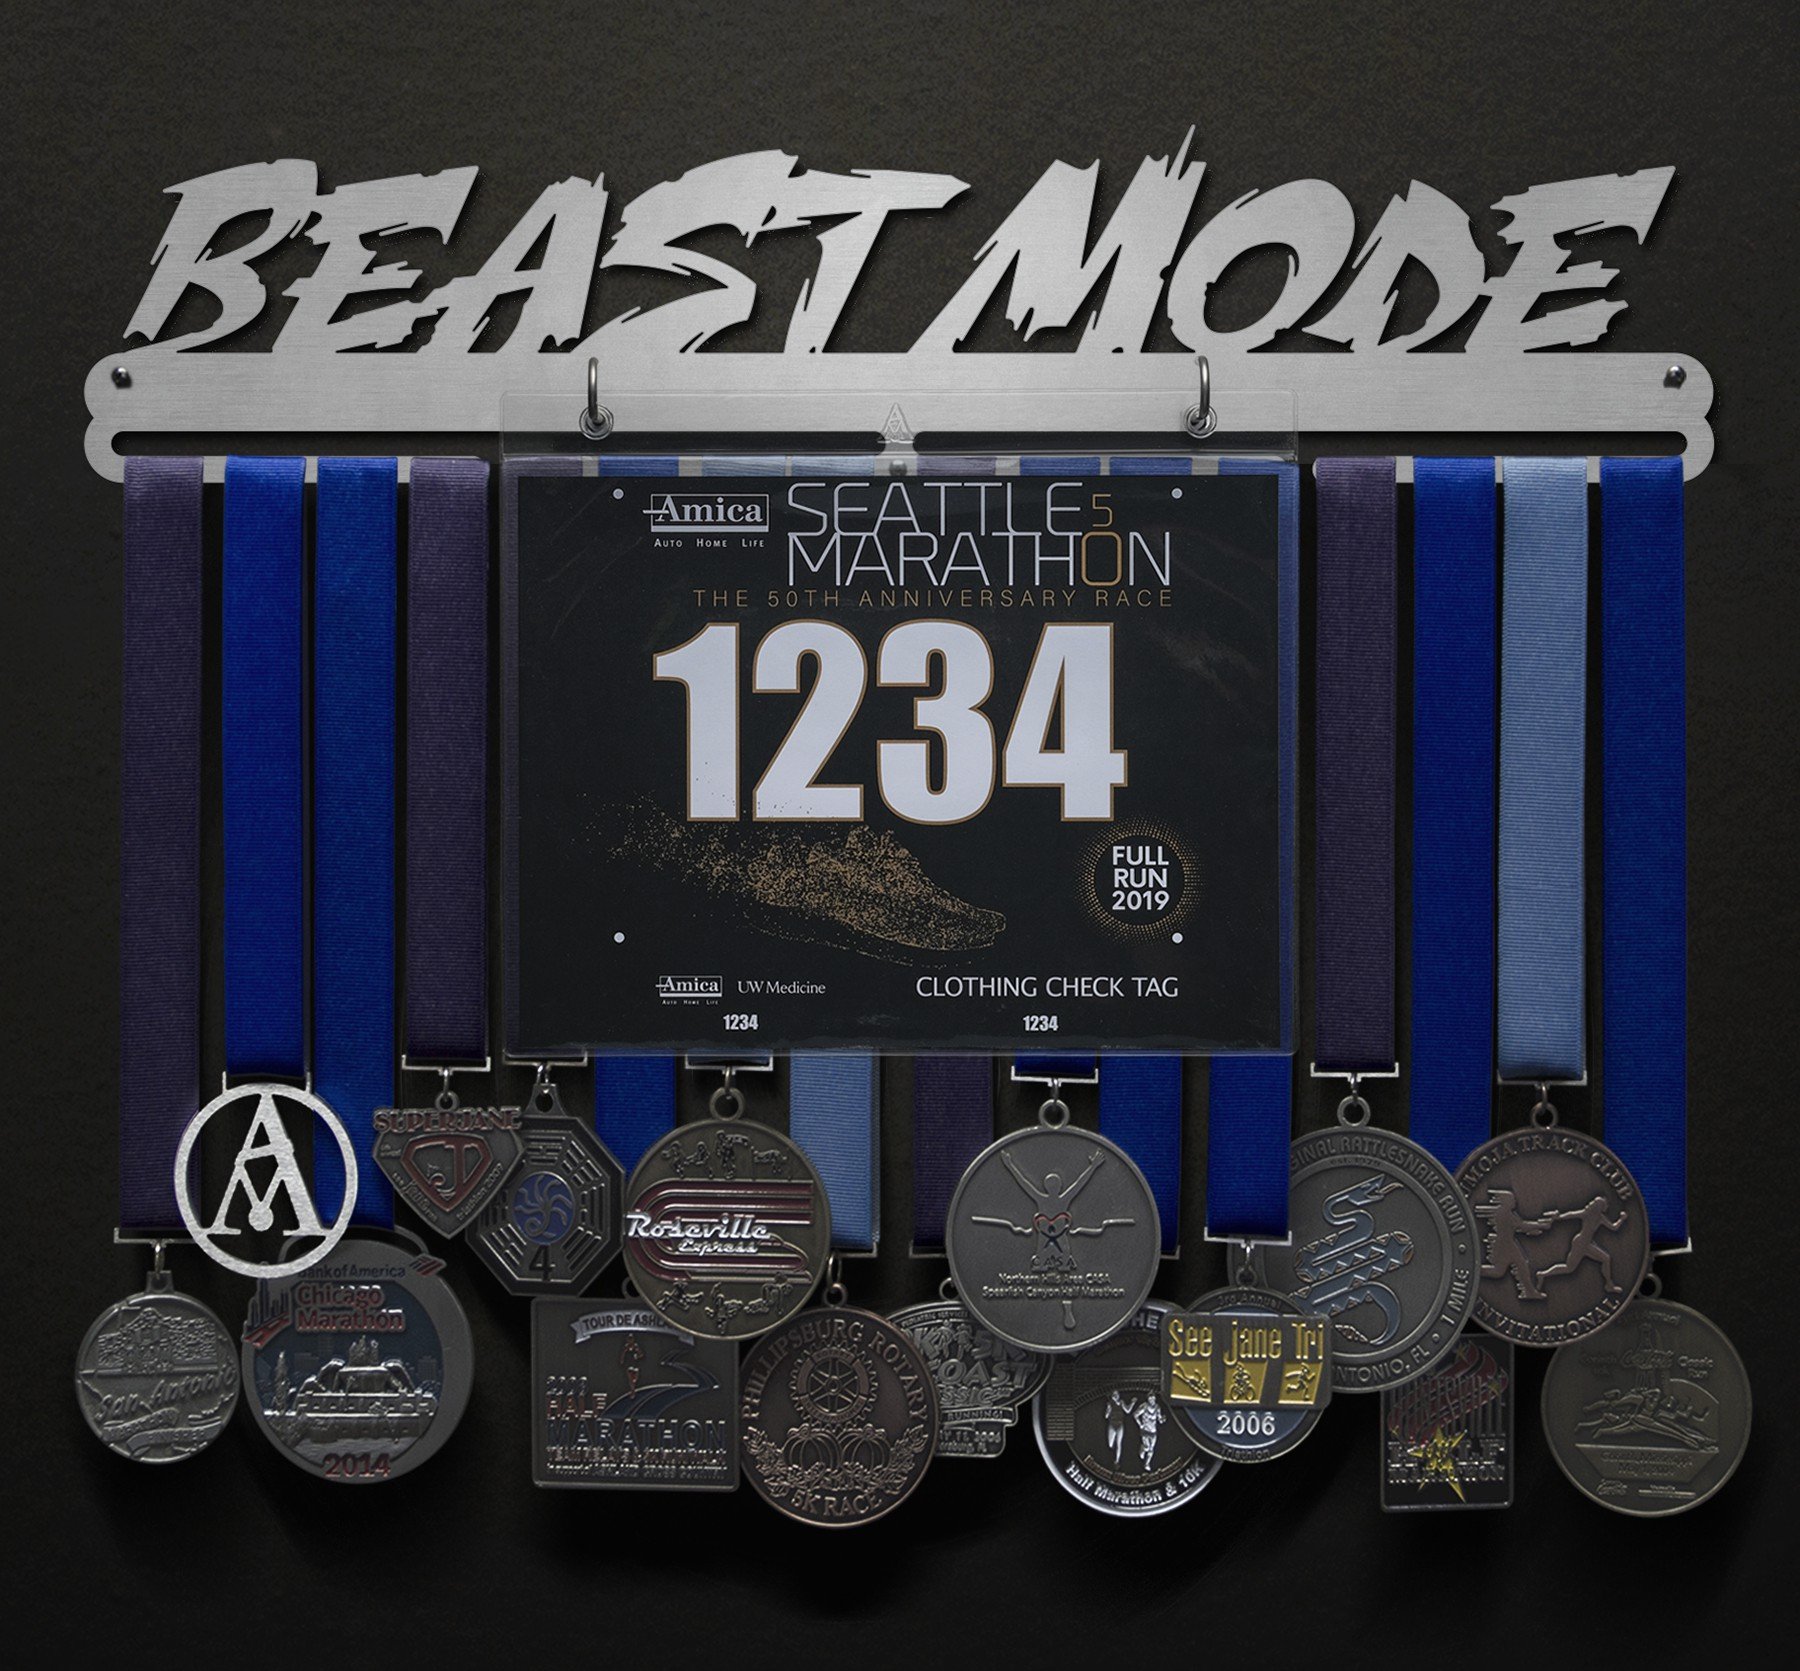 Beast Mode Bib and Medal Display